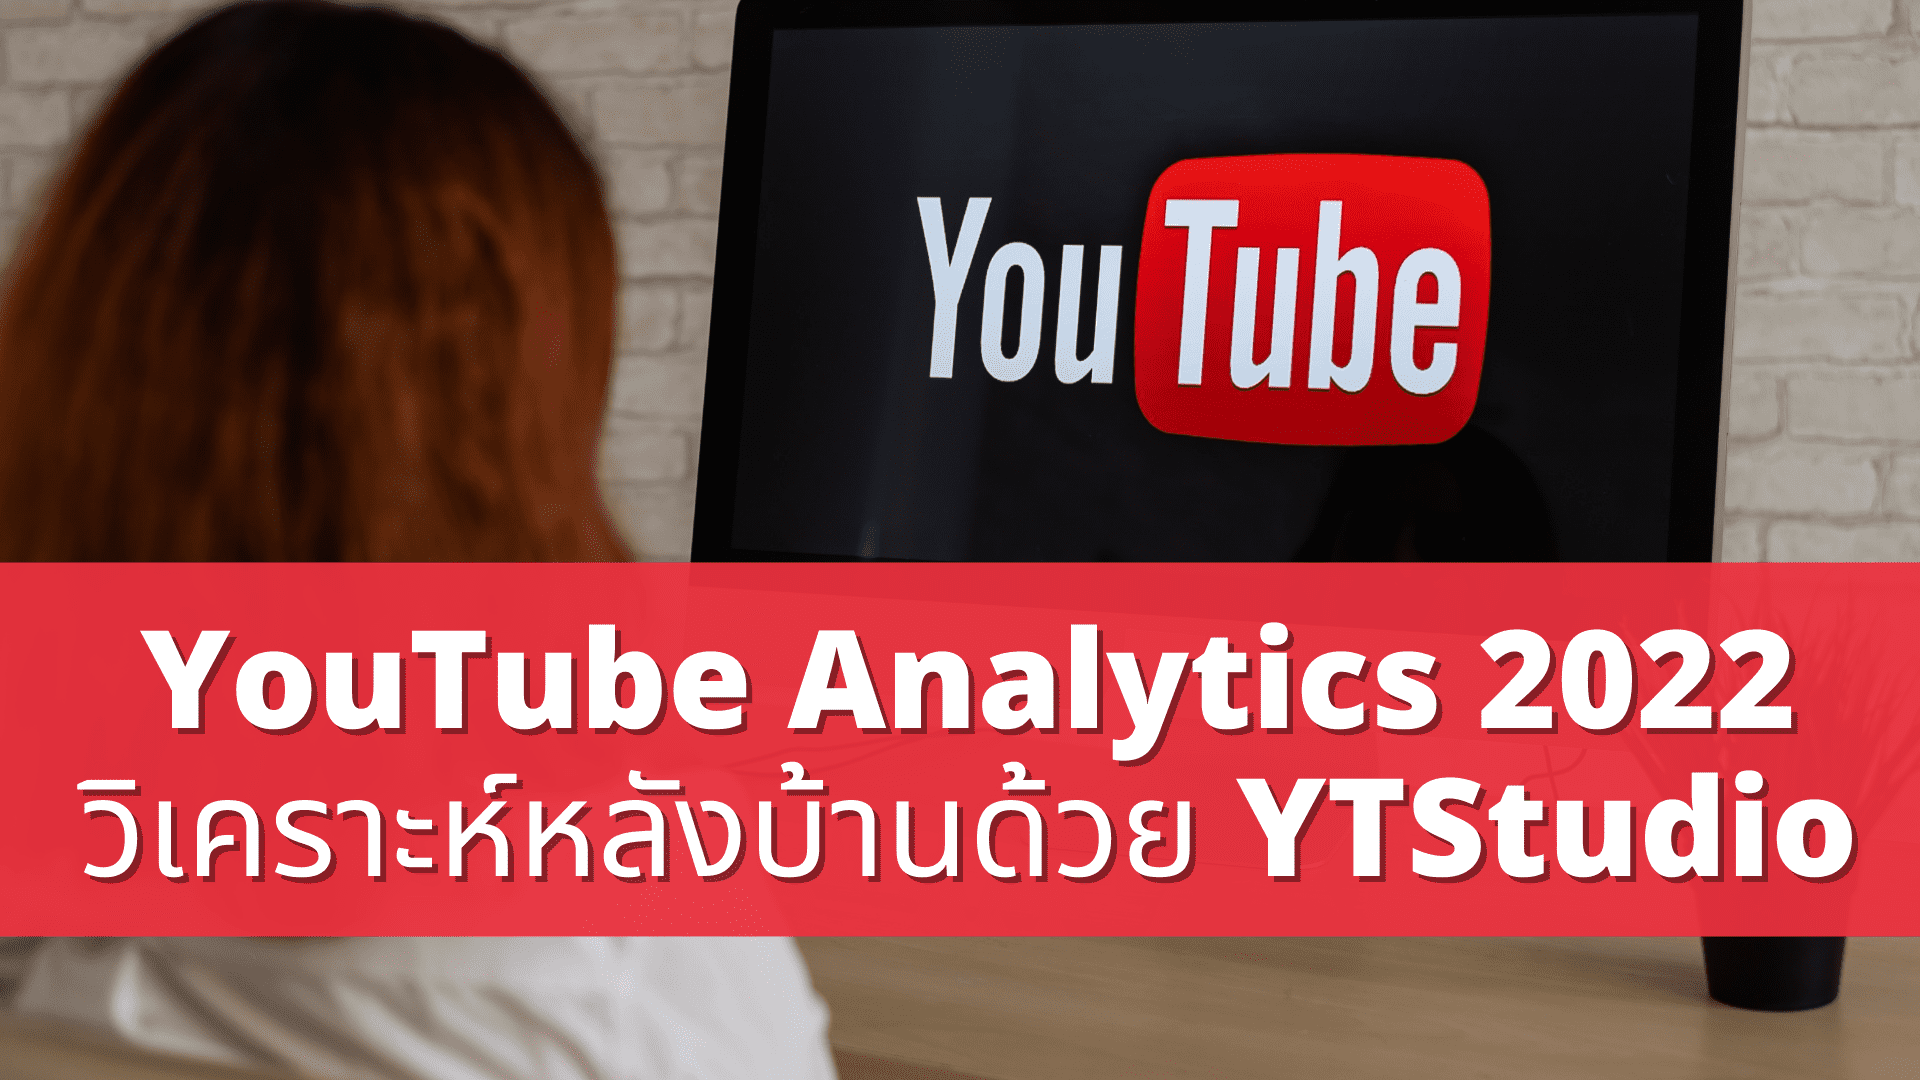 YouTube Analytics 2022 วิเคราะห์หลังบ้านด้วย YTStudio